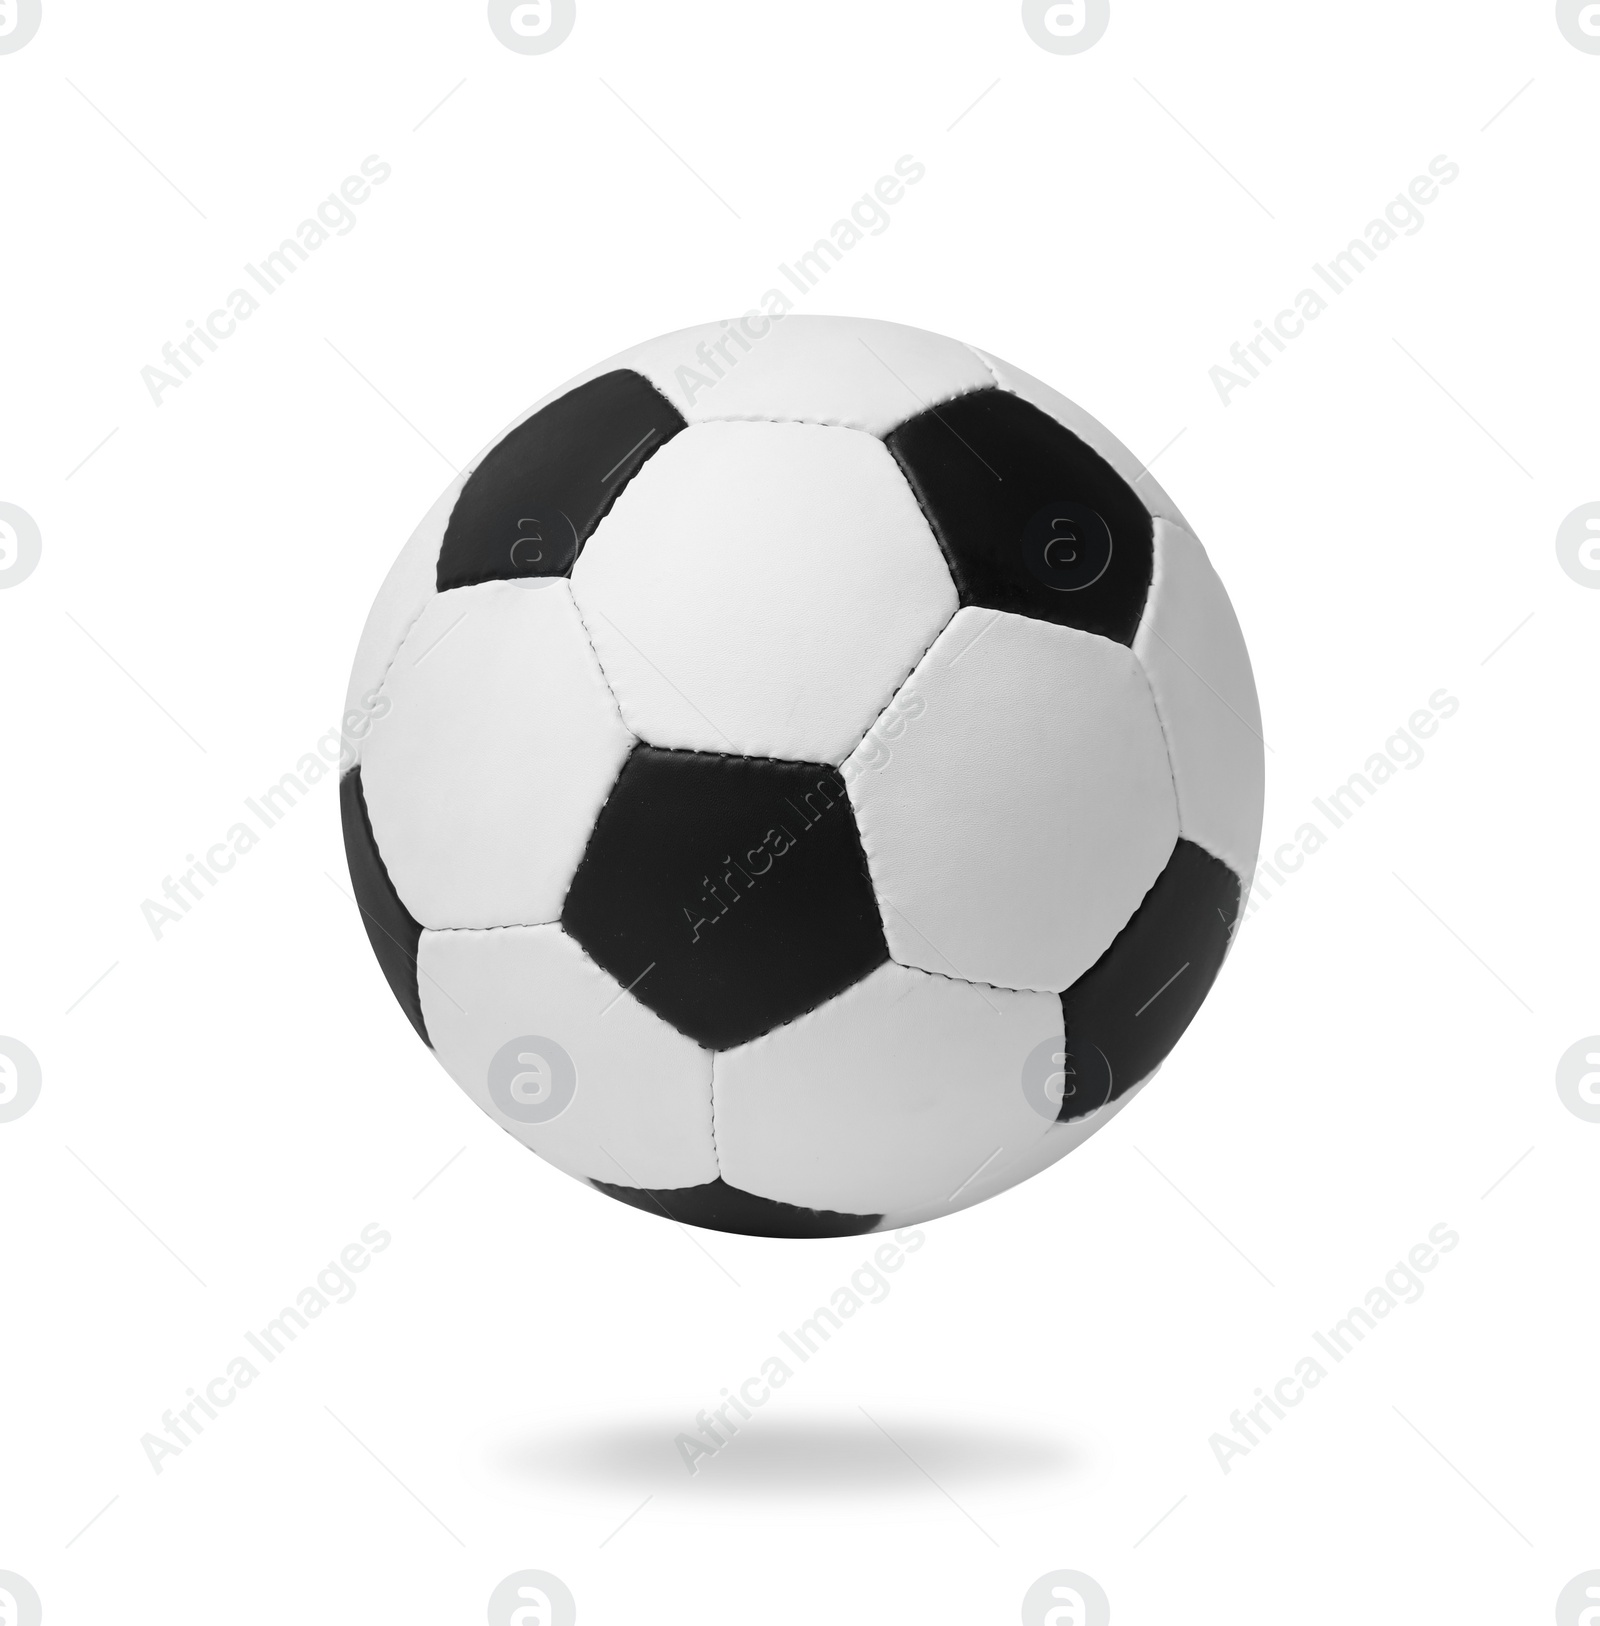 Image of New soccer ball on white background. Football equipment